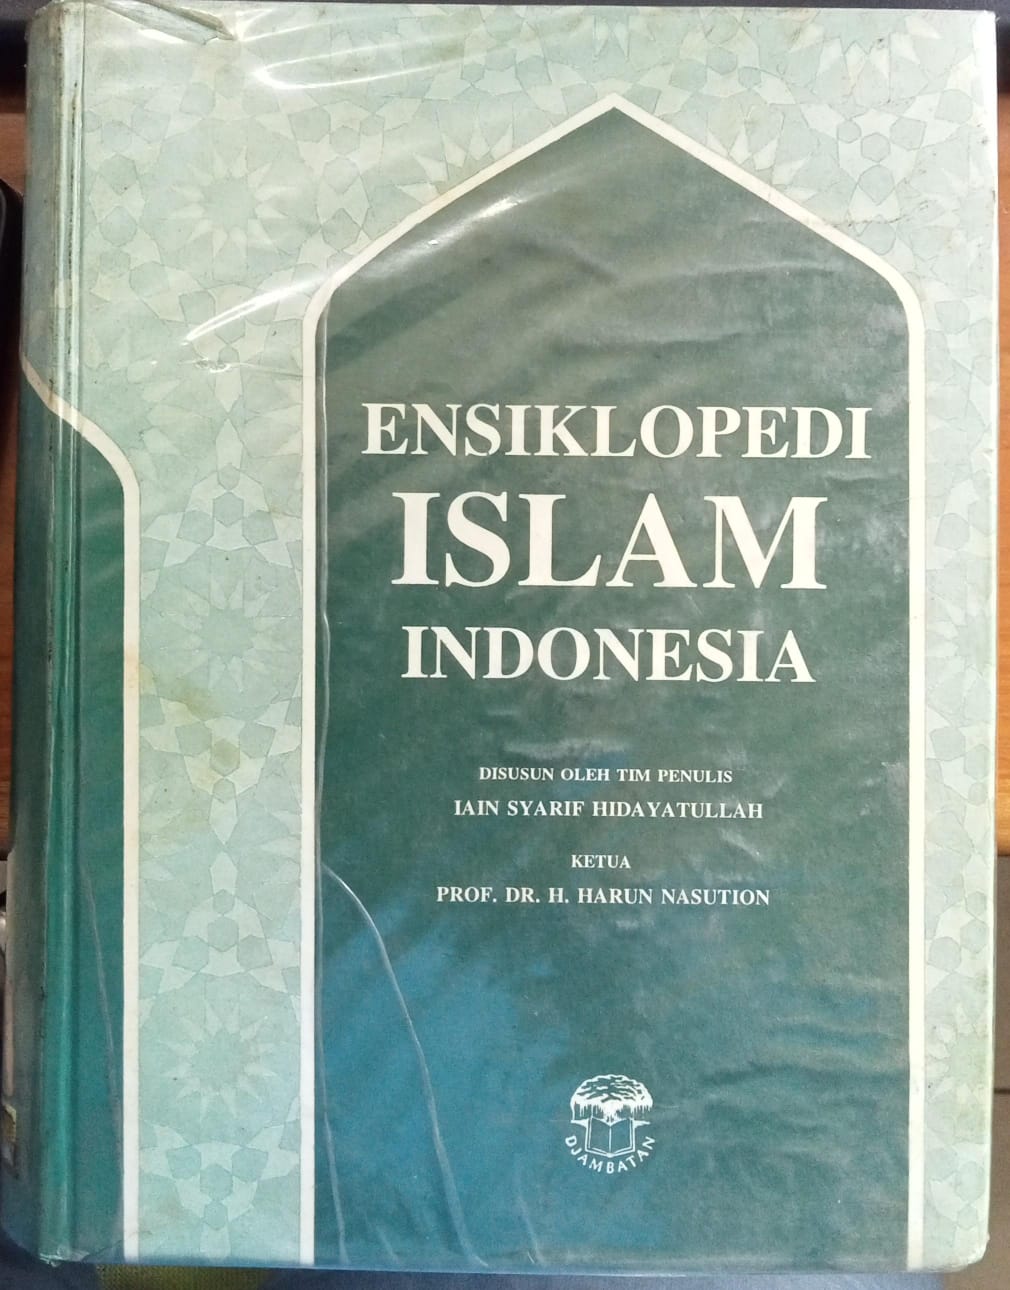 Ensiklopedi islam indonesia